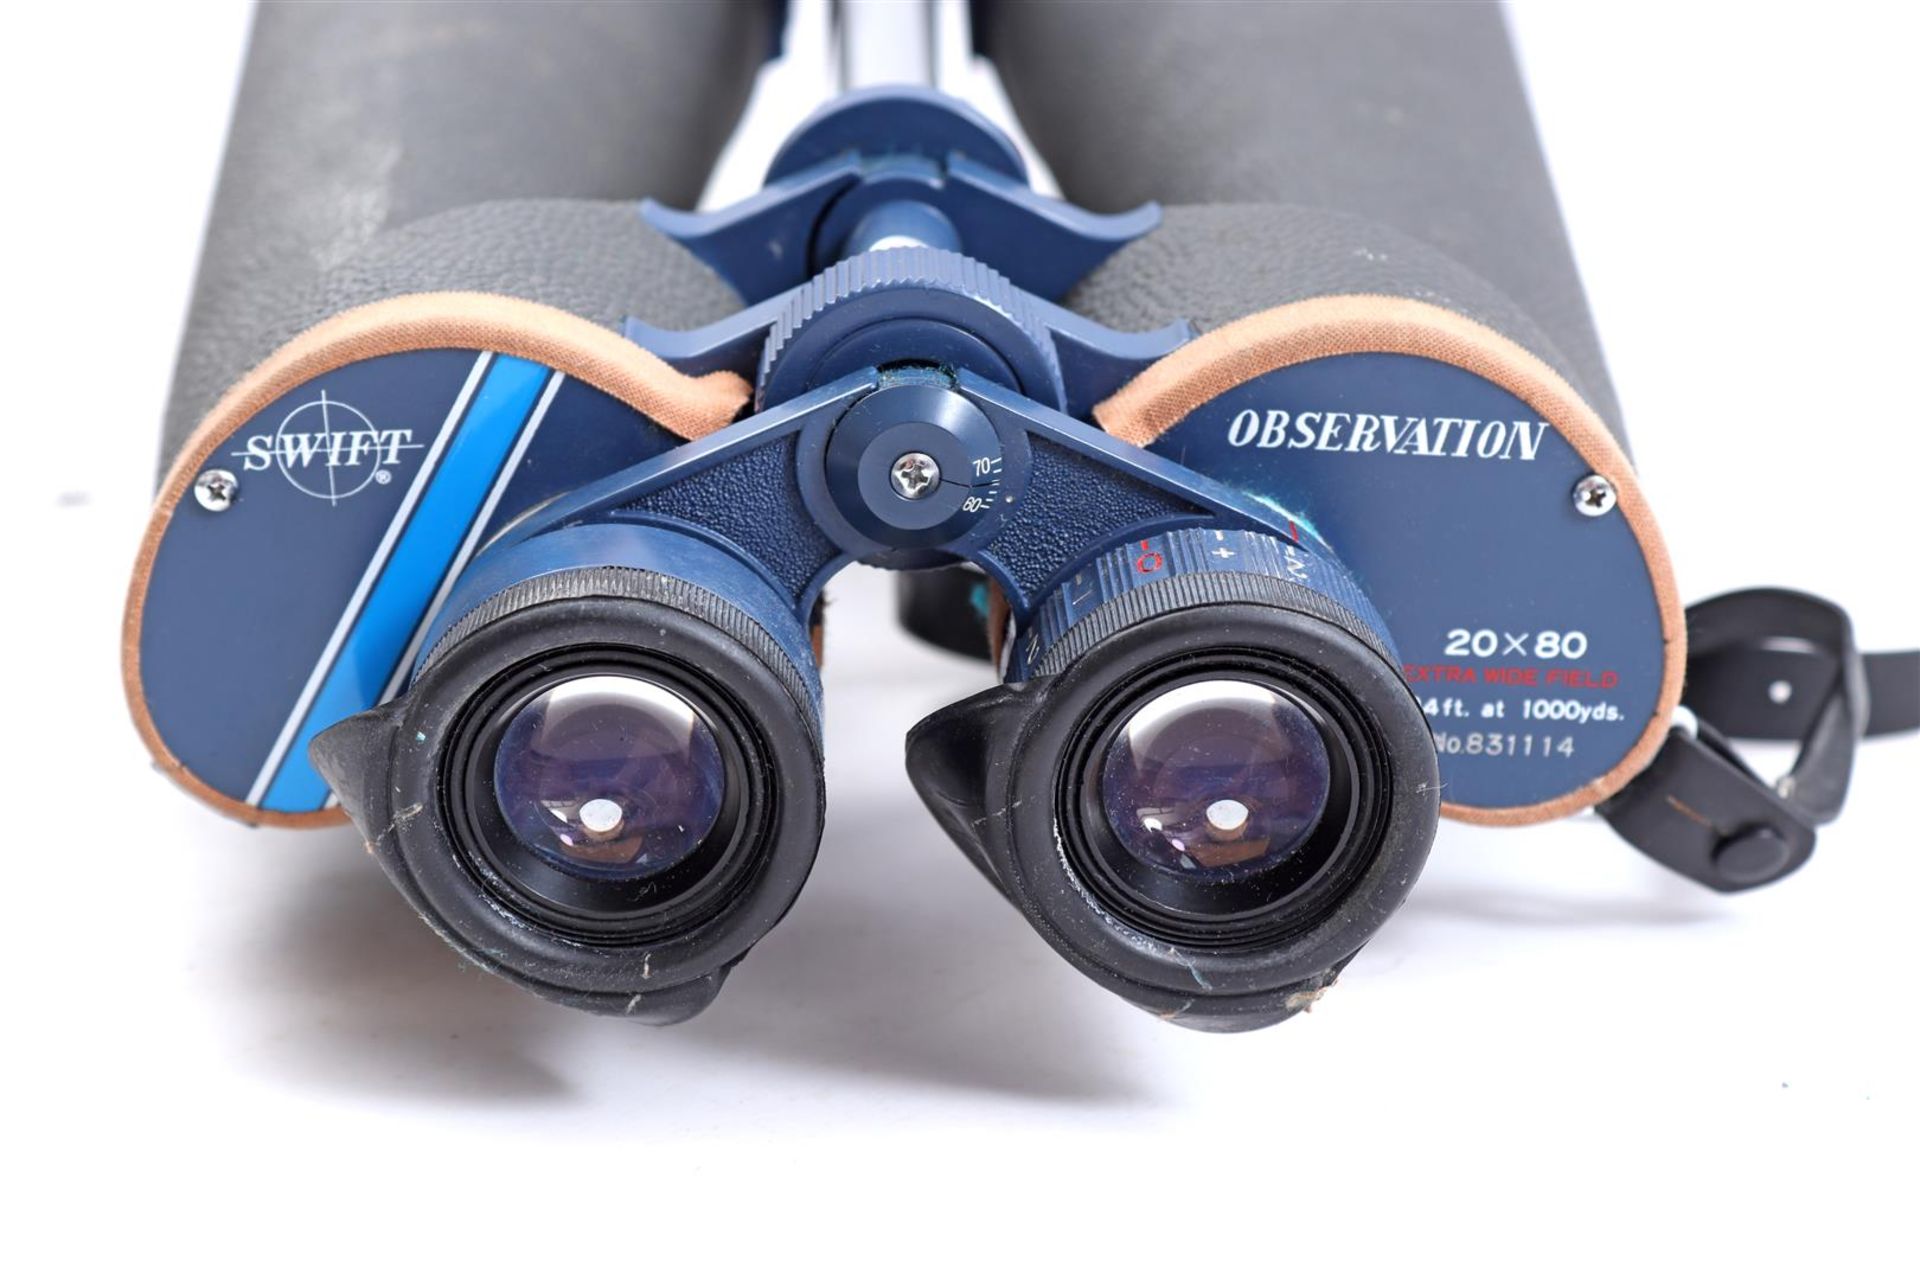 Swift Observation binoculars - Image 2 of 3